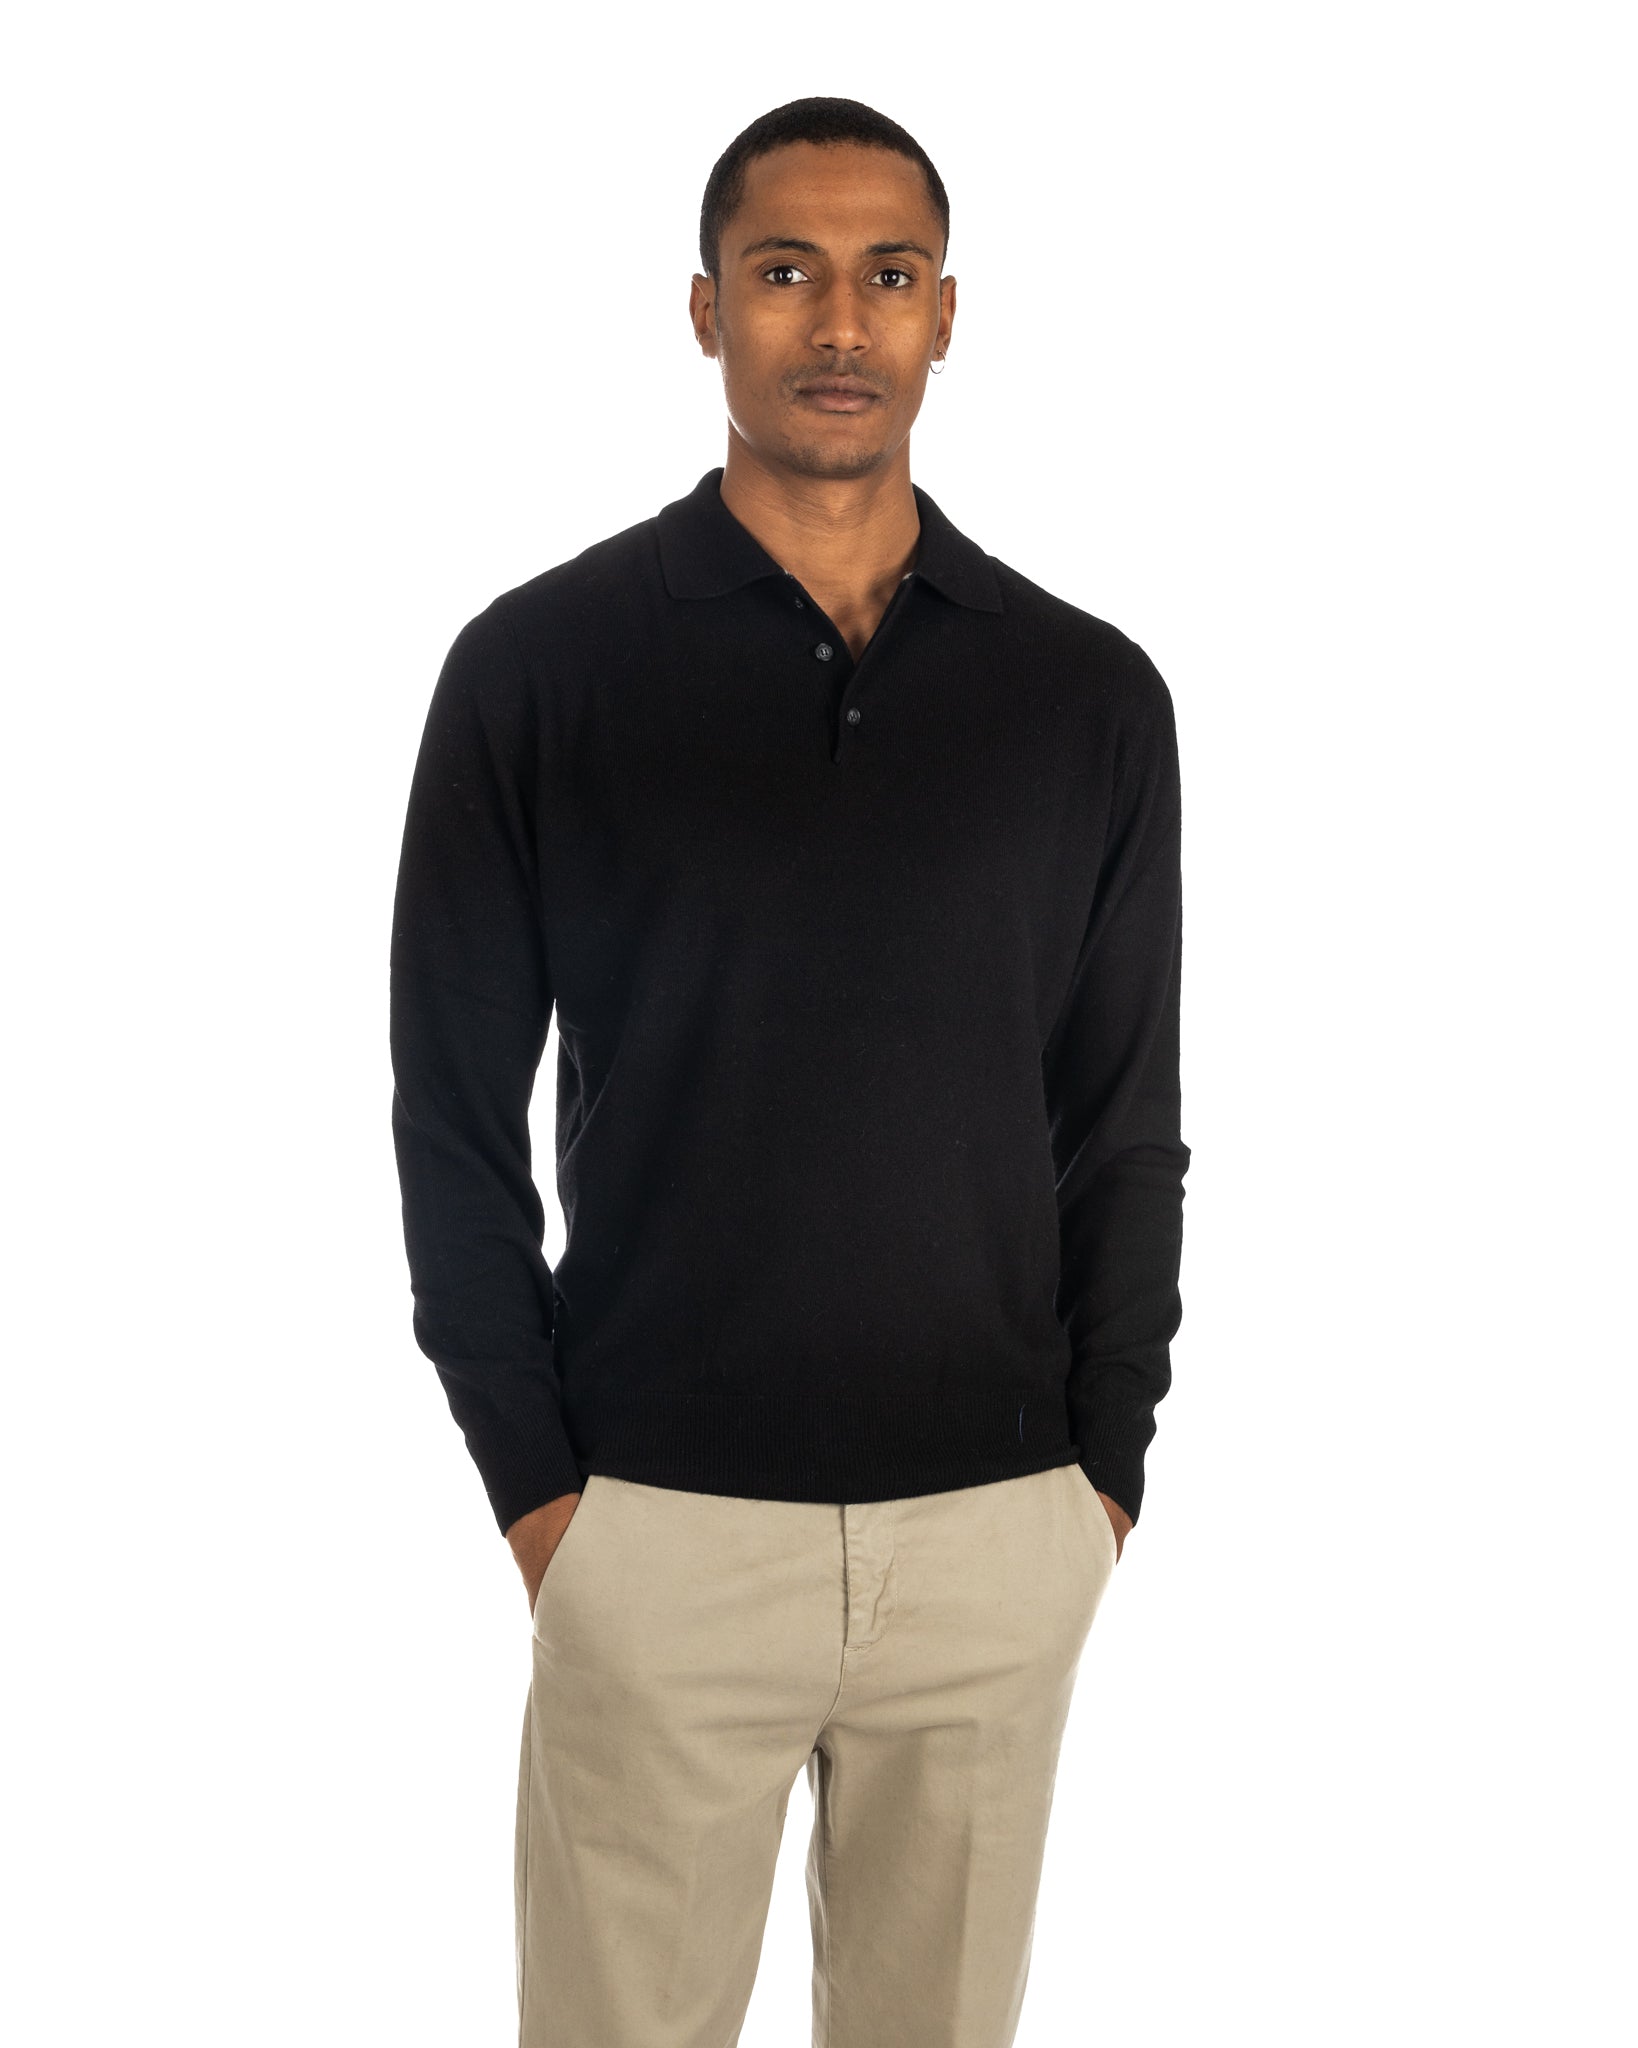 Tiger - black cashmere blend polo shirt